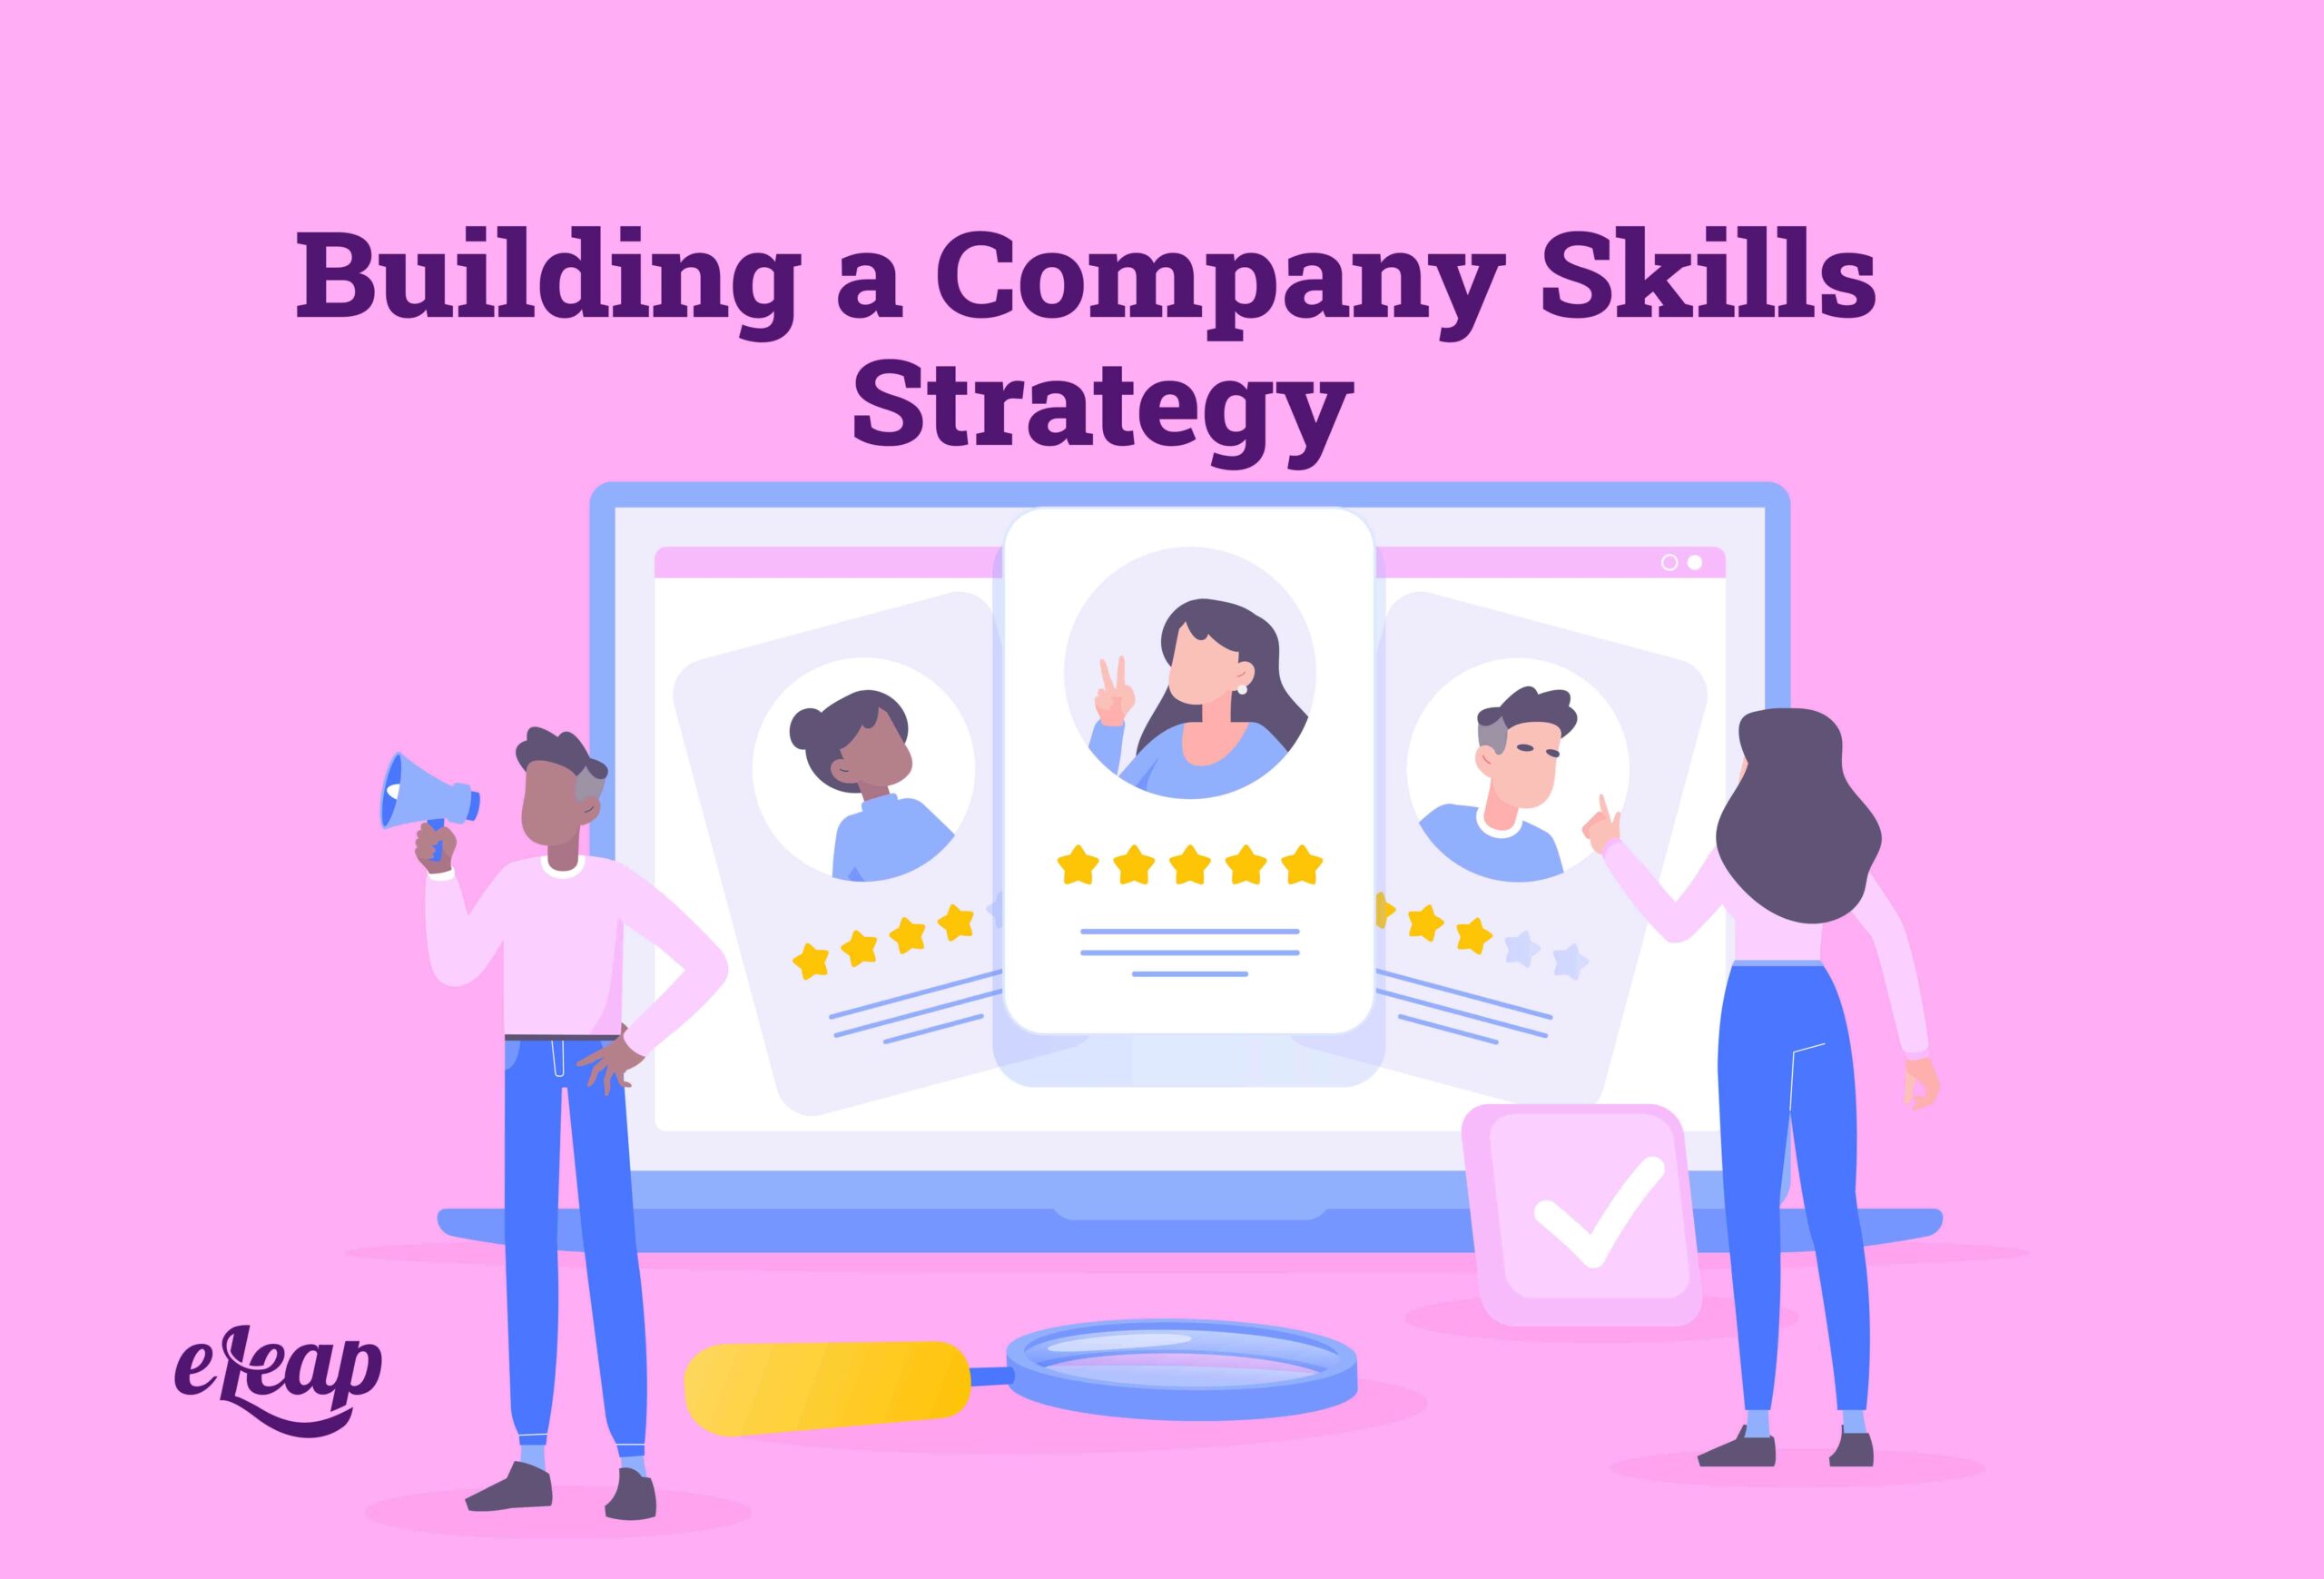 Building a Company Skills Strategy